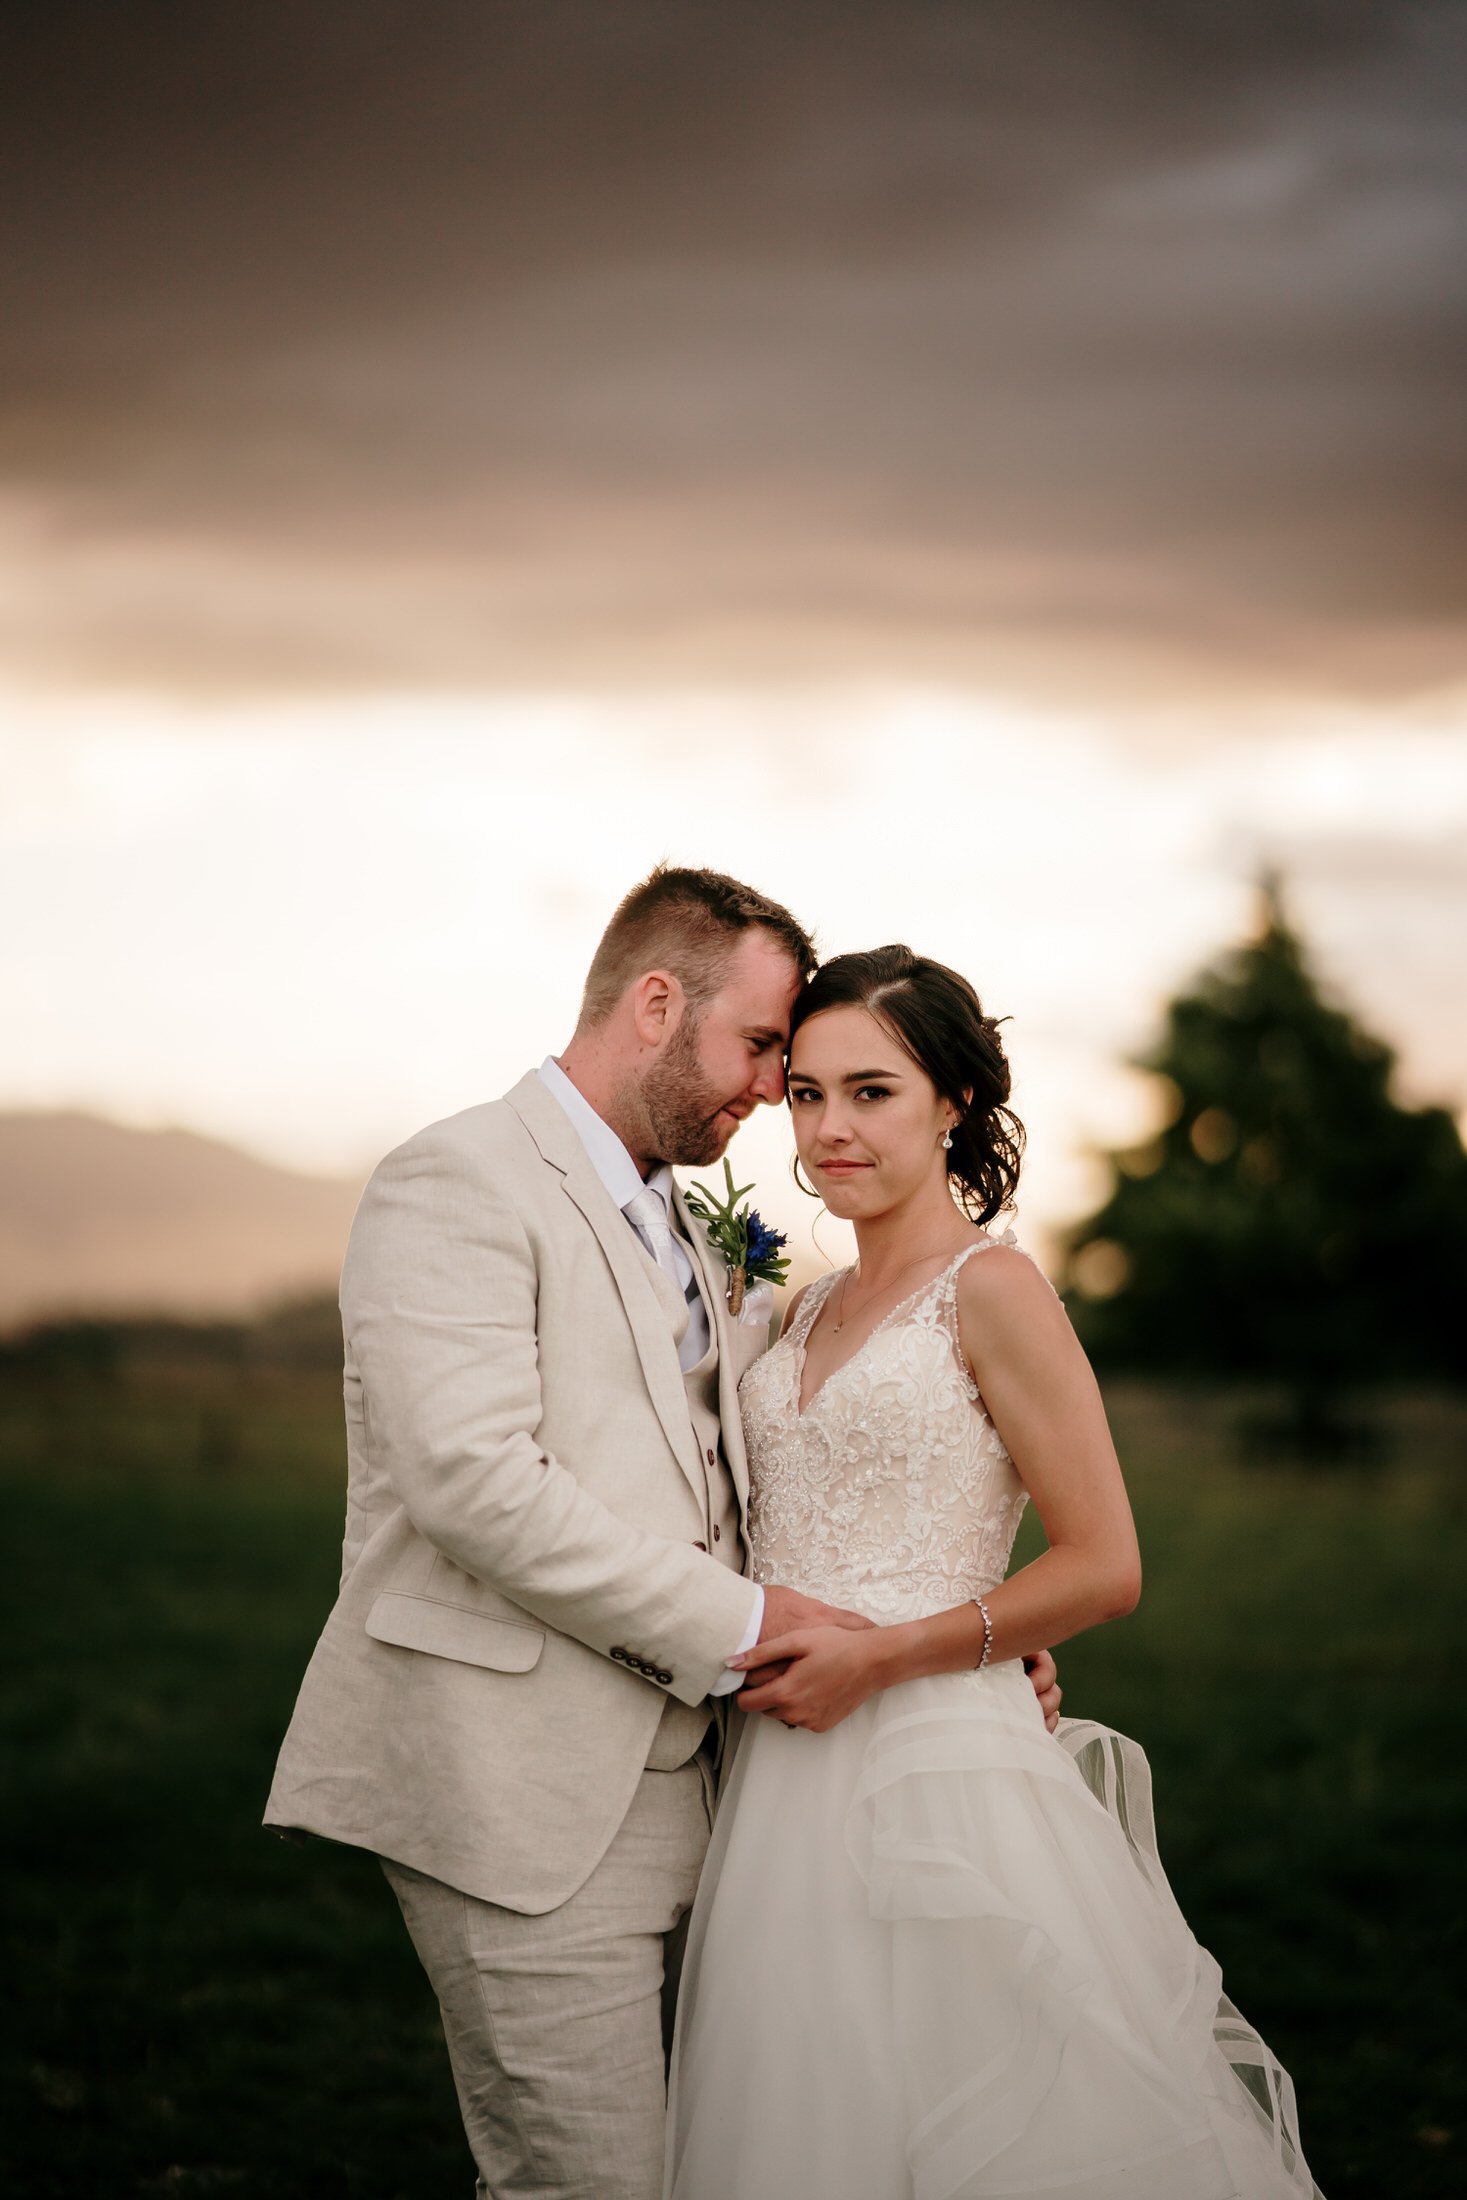 Astral-bridal-wedding-gown-photographer-auckland-videographer-farm-rustic (8).jpg